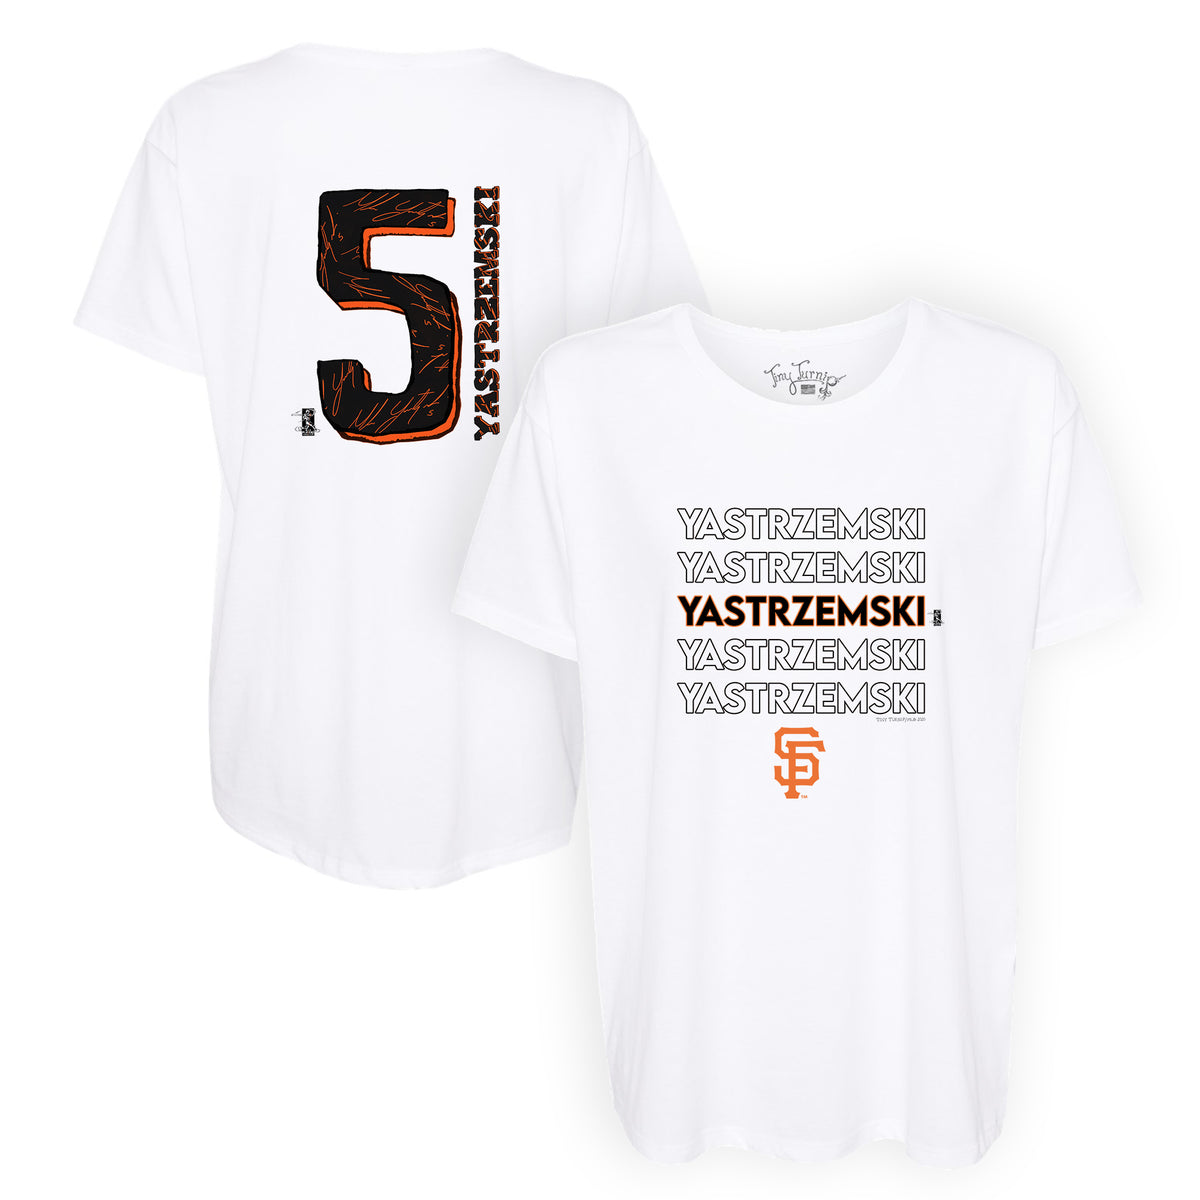 Lids San Francisco Giants Tiny Turnip Infant Baseball Love T-Shirt